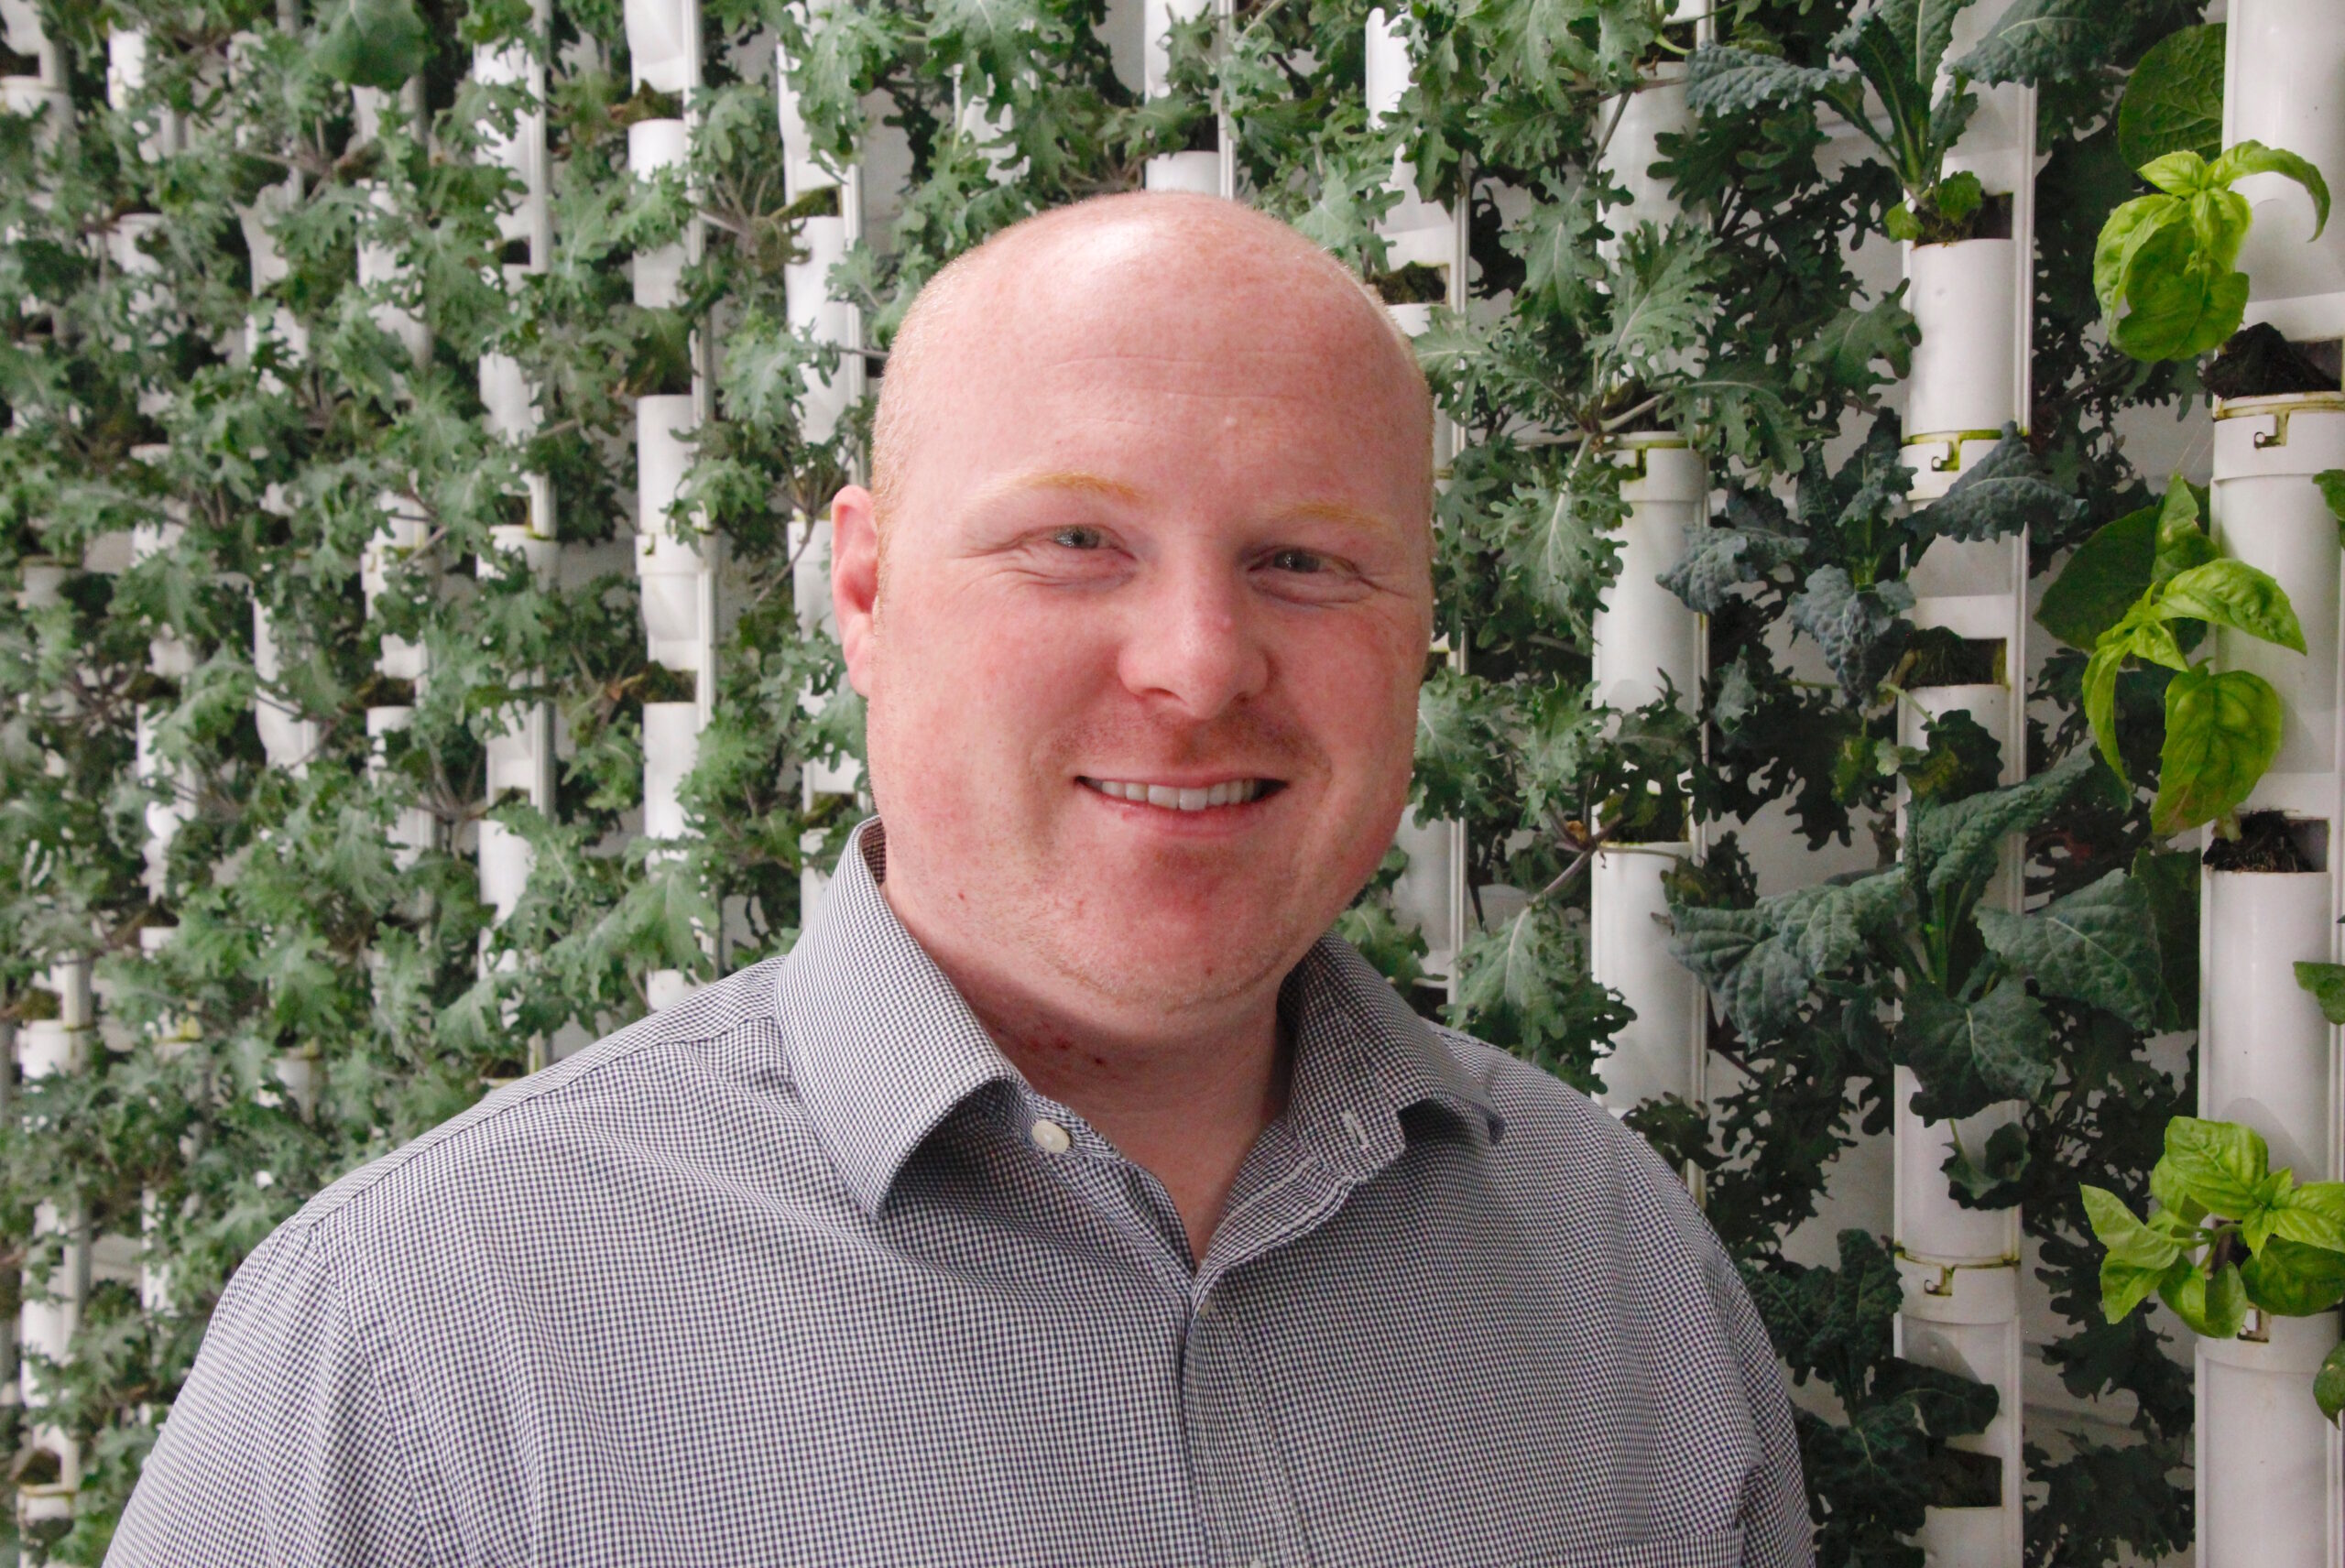 Personal values, experience lead new executive VP Joseph Cammack to FarmBox Foods